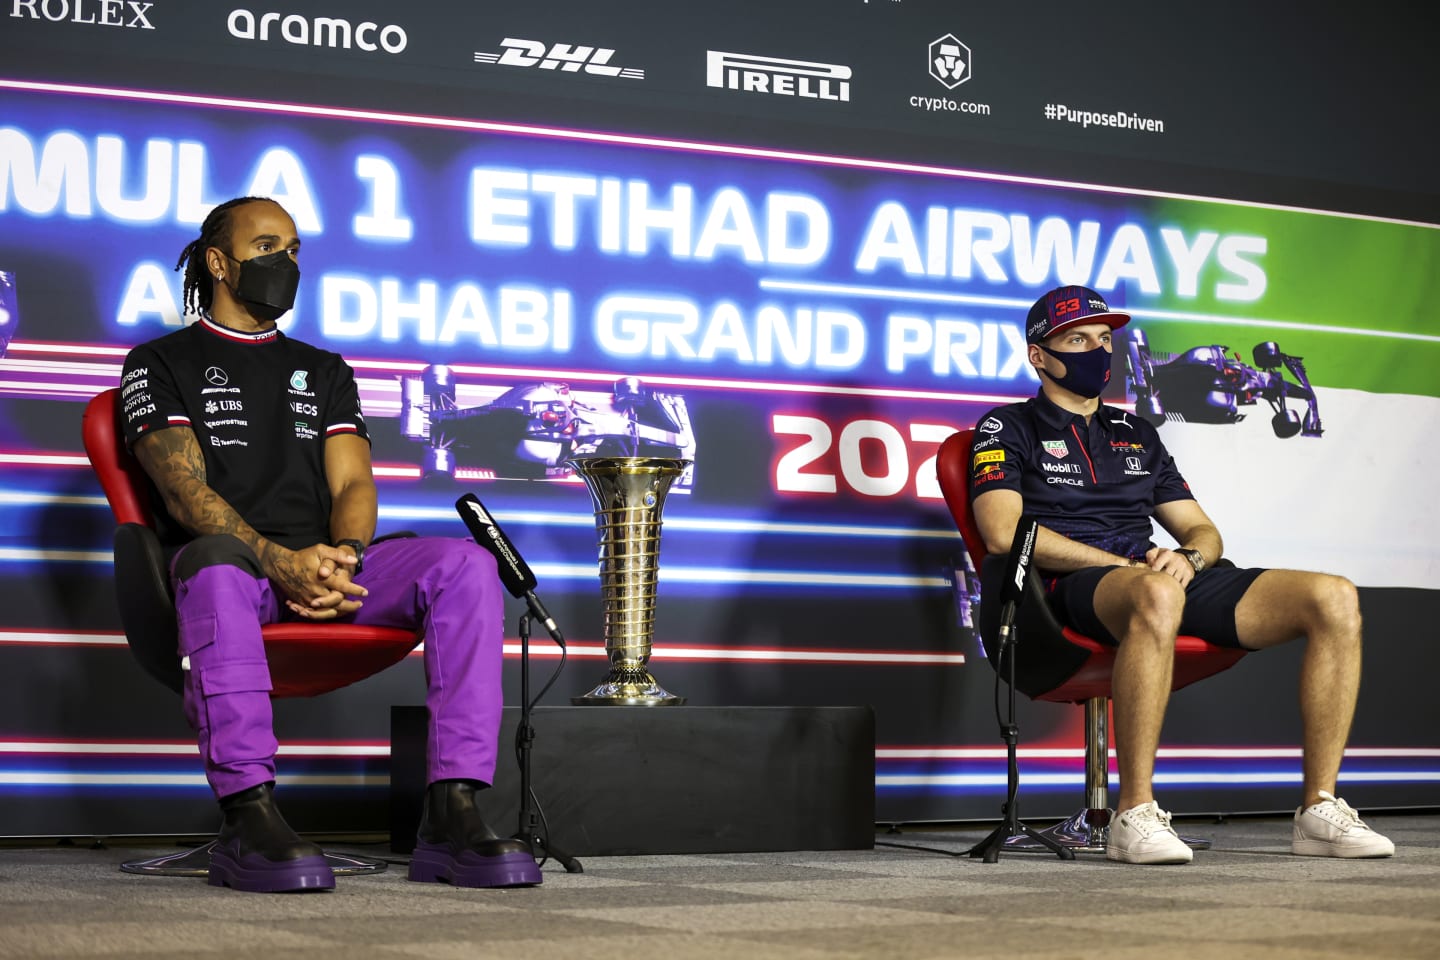 ABU DHABI, UNITED ARAB EMIRATES - DECEMBER 09: Lewis Hamilton of Great Britain and Mercedes GP and